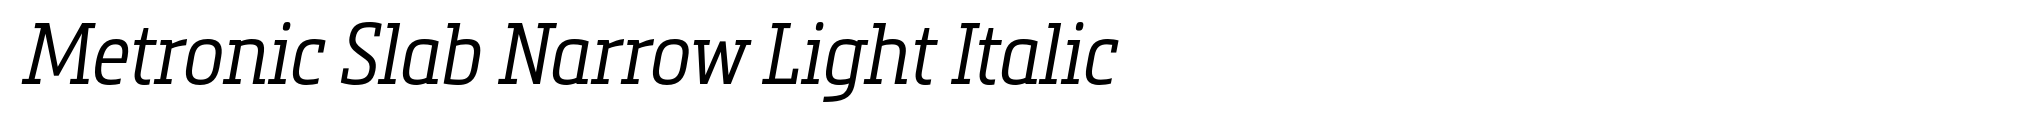 Metronic Slab Narrow Light Italic image